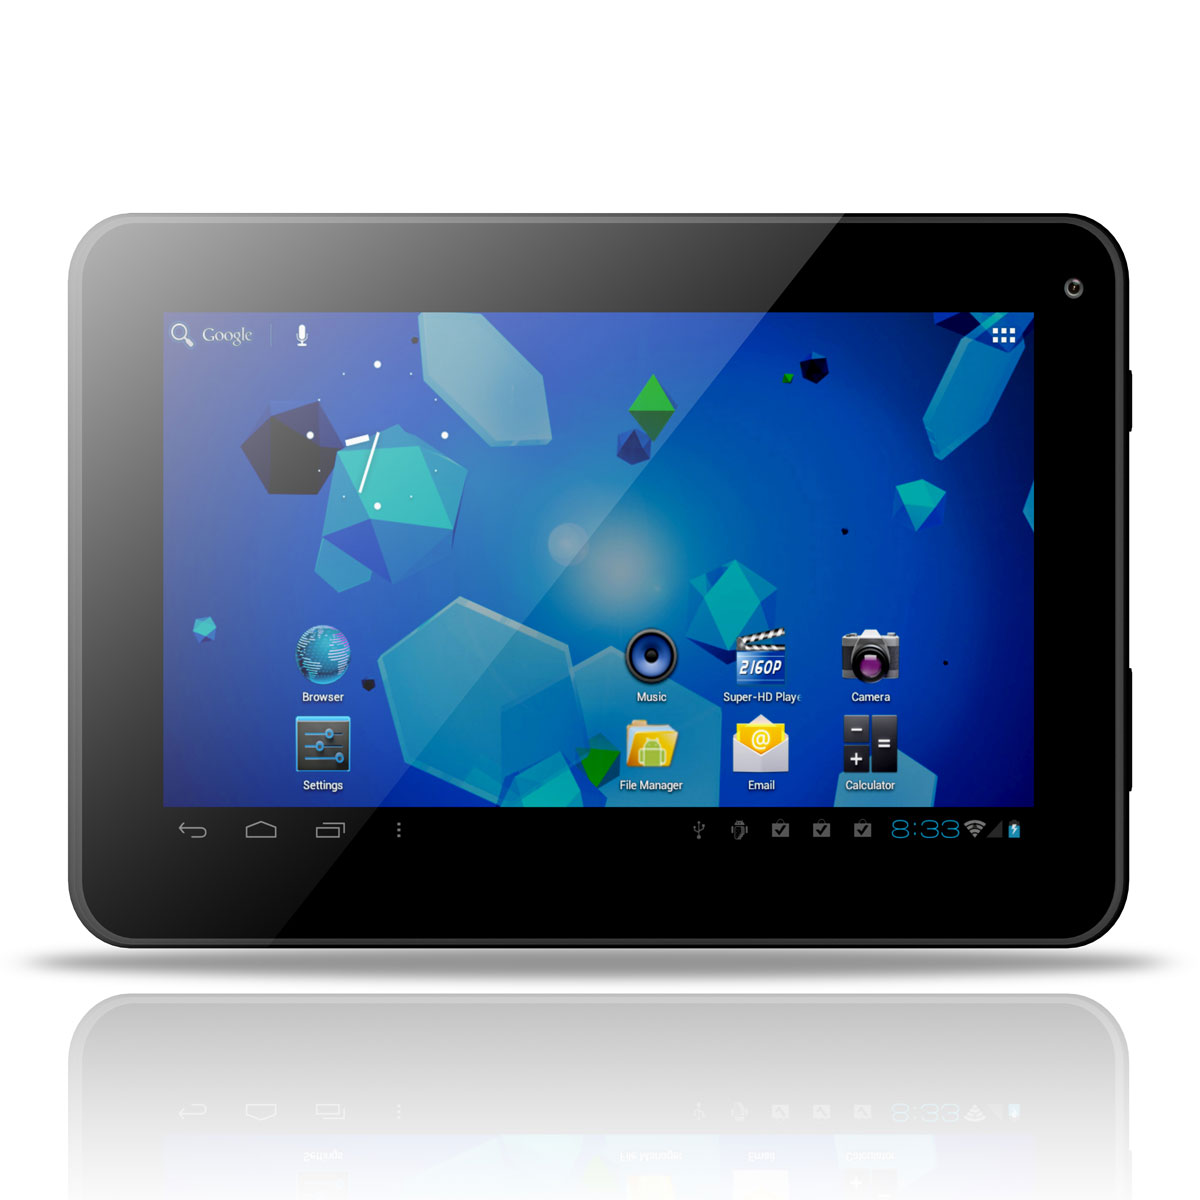 rk3026 tablet firmware update